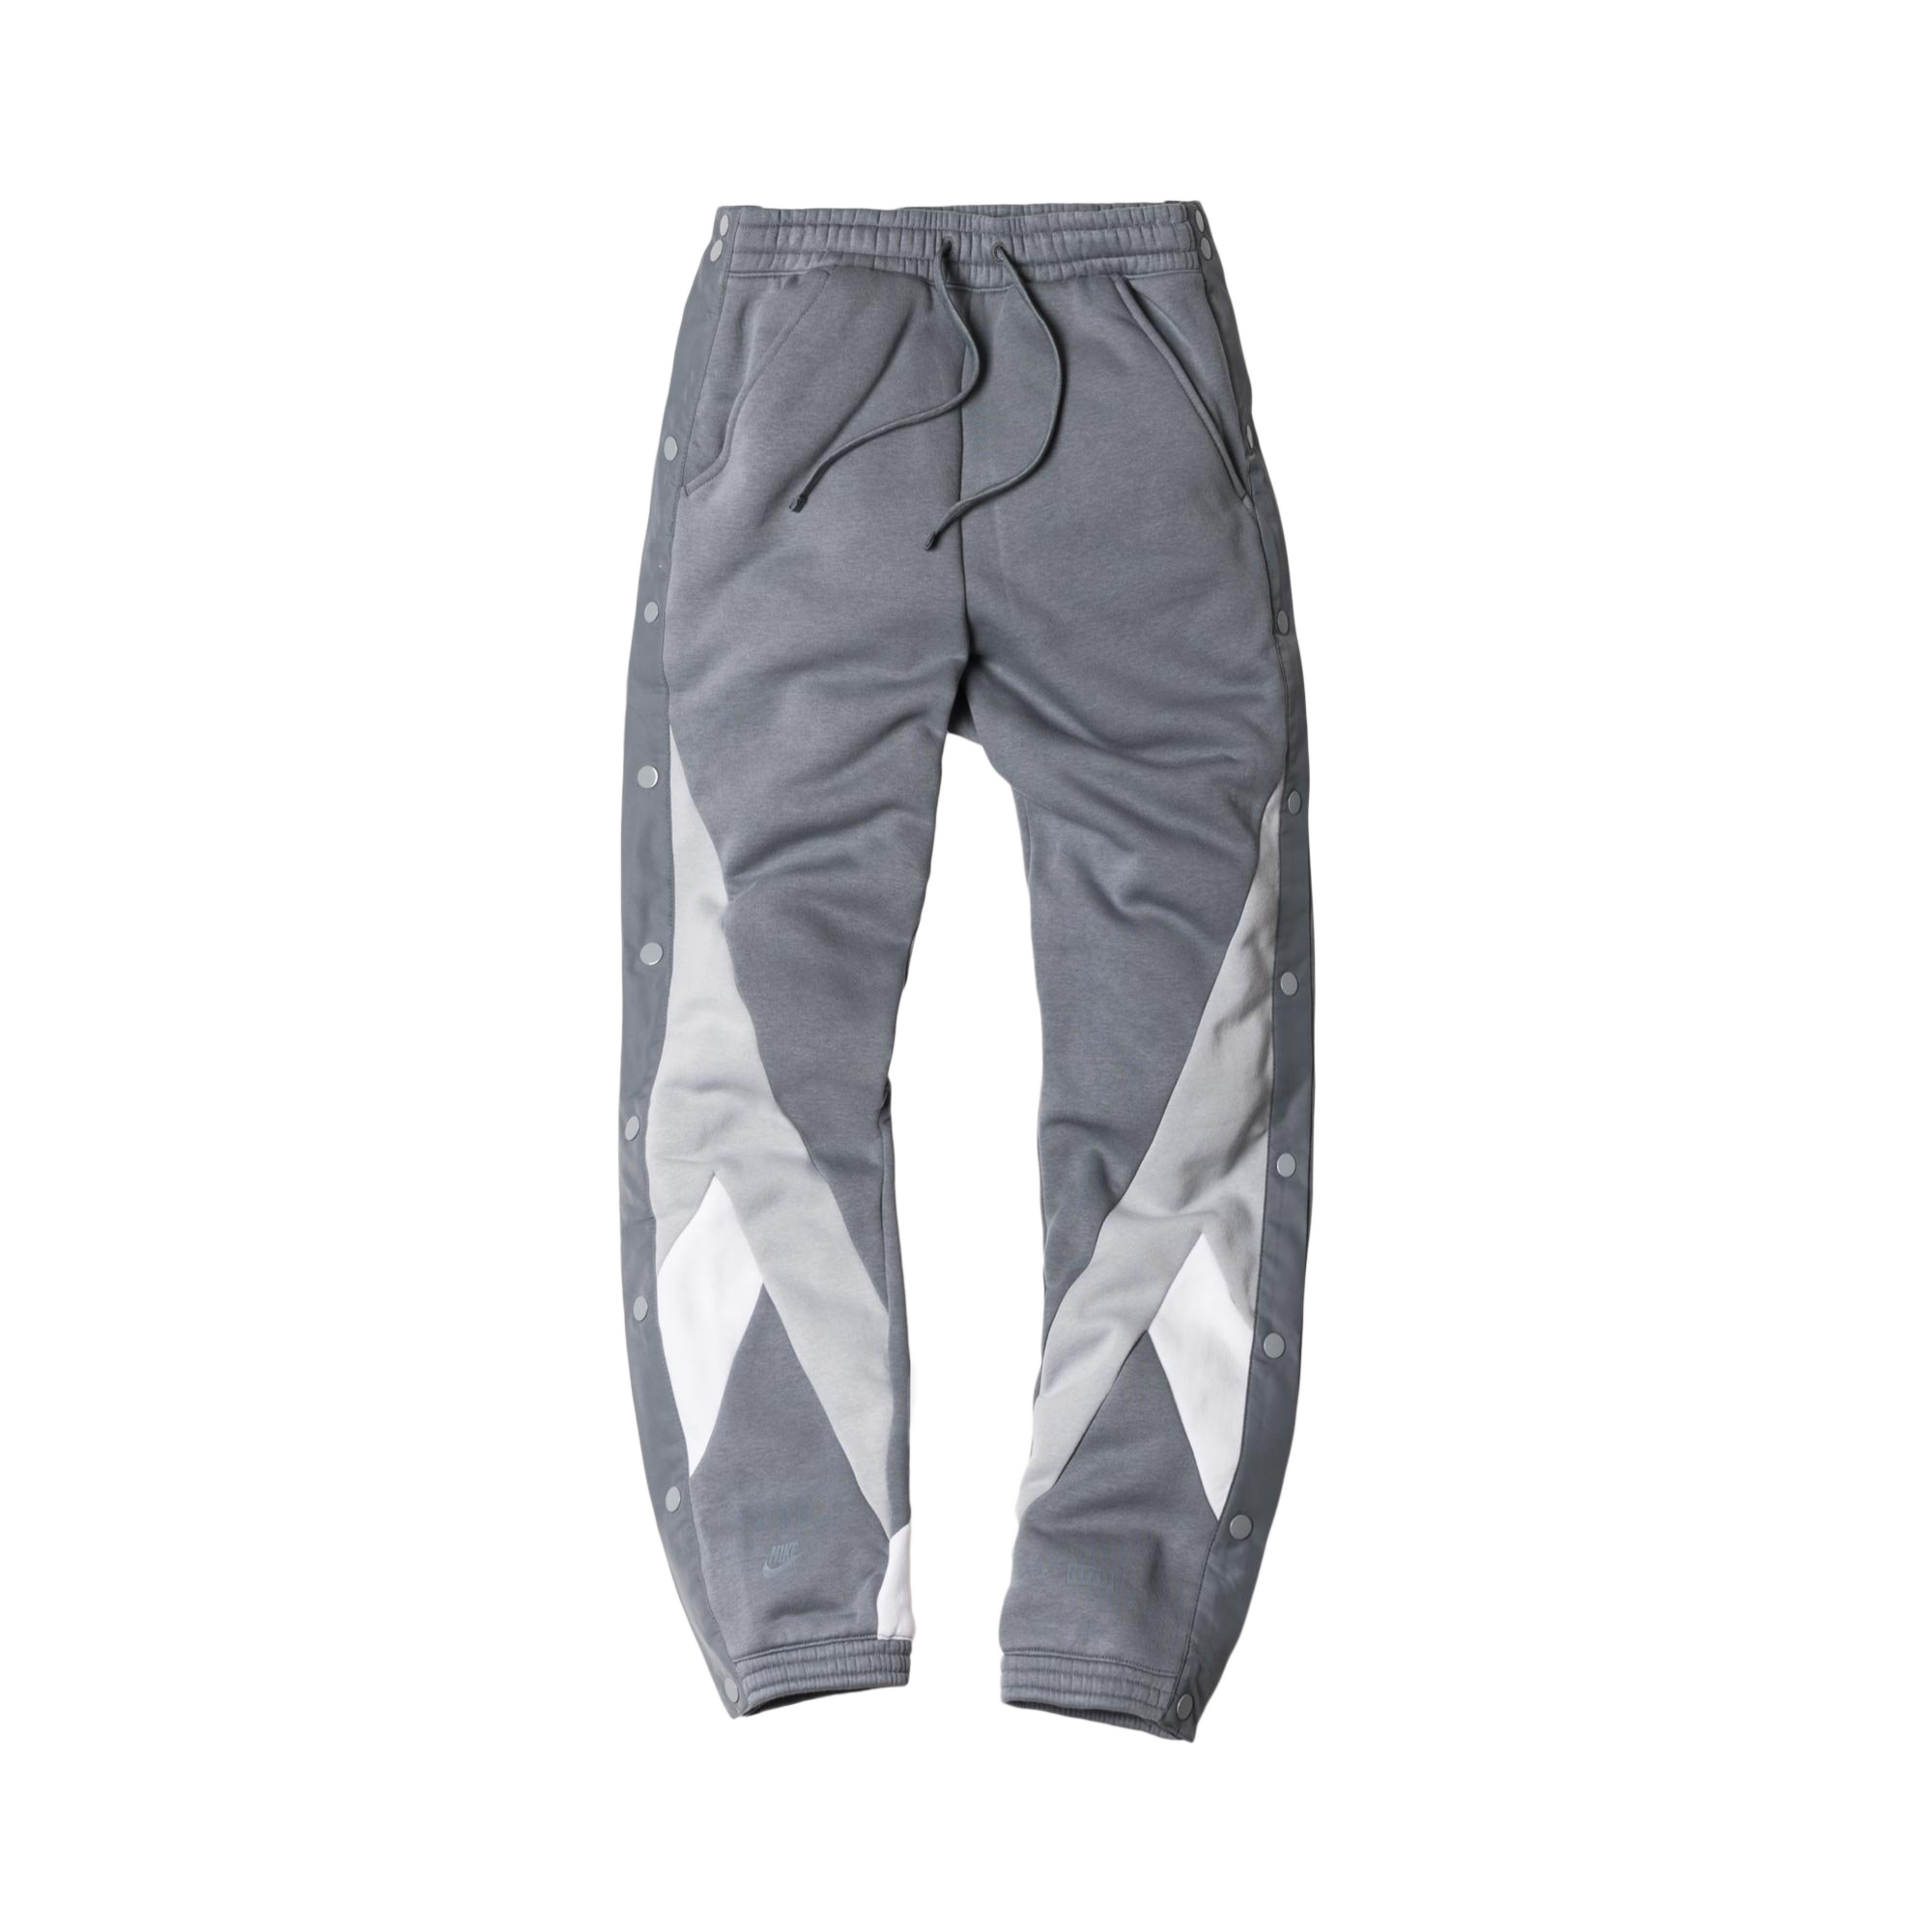 Kith Nike Tearaway Pant Grey - FW17 メンズ - JP